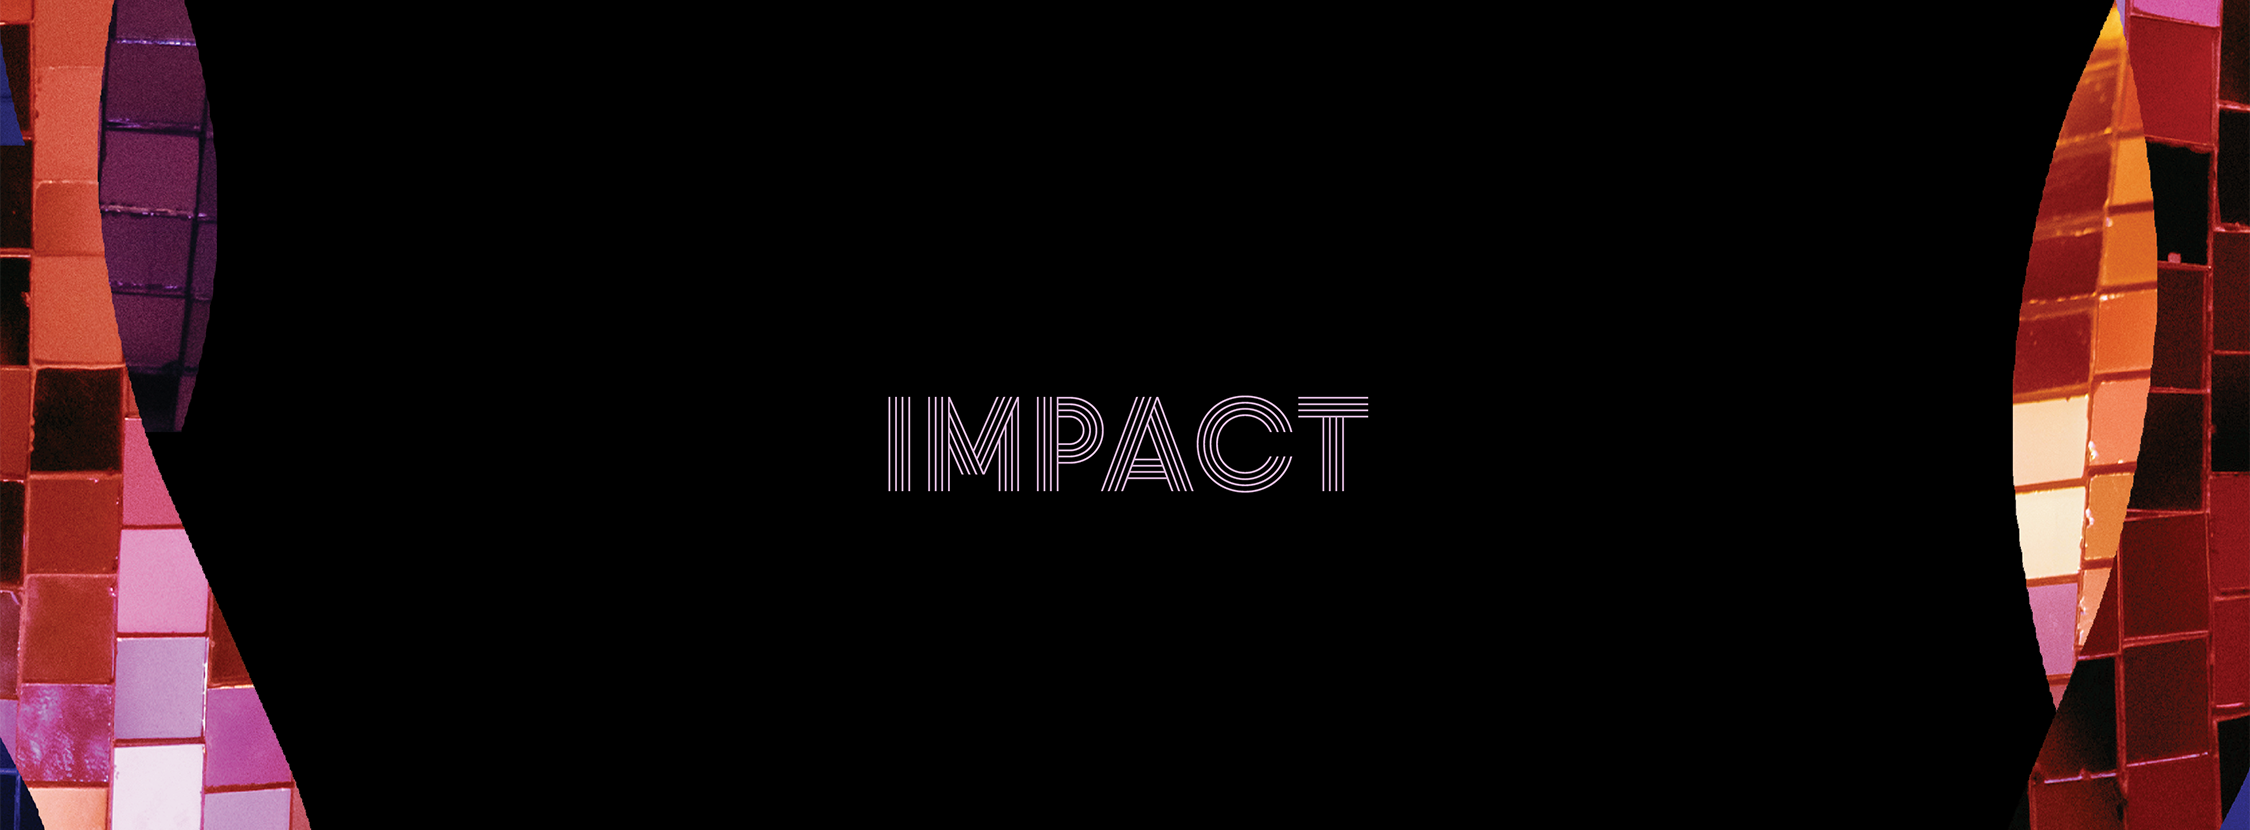 Impact - Banner Image